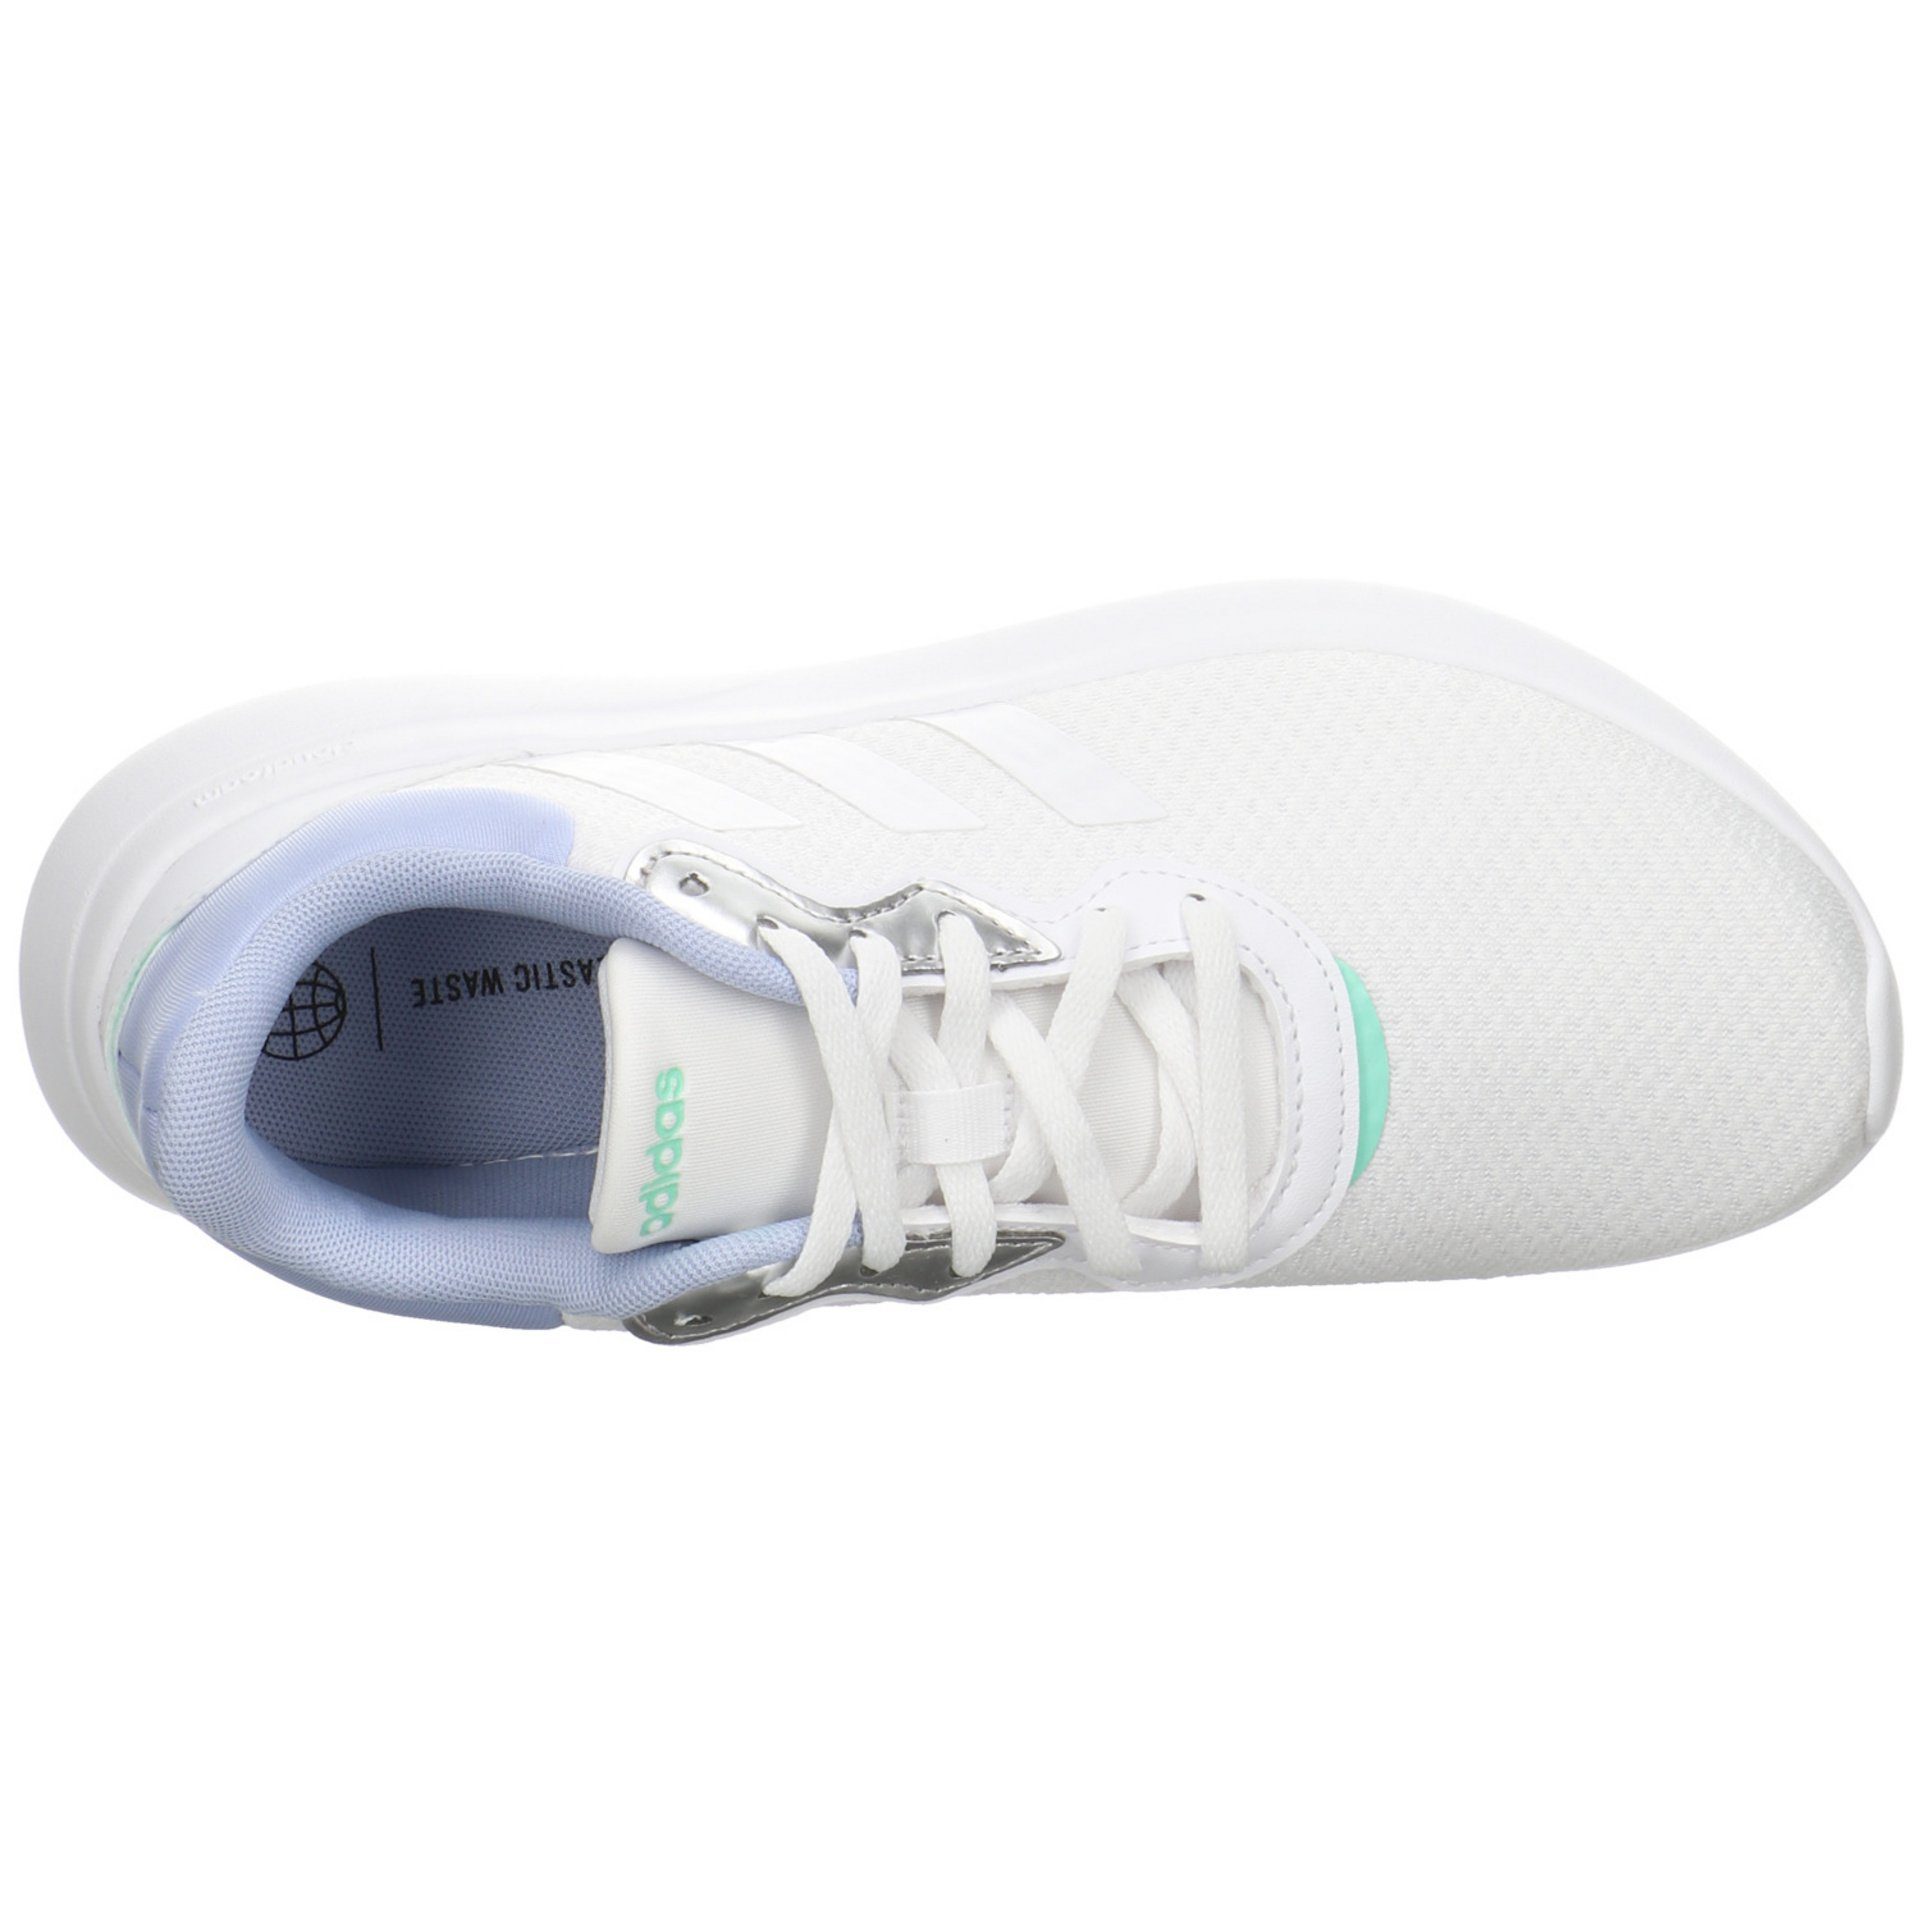 Sneaker QT Damen Laufschuh FTWWHT/FTWWHT/BLUDAW Originals 3.0 Laufschuhe Textil Racer adidas